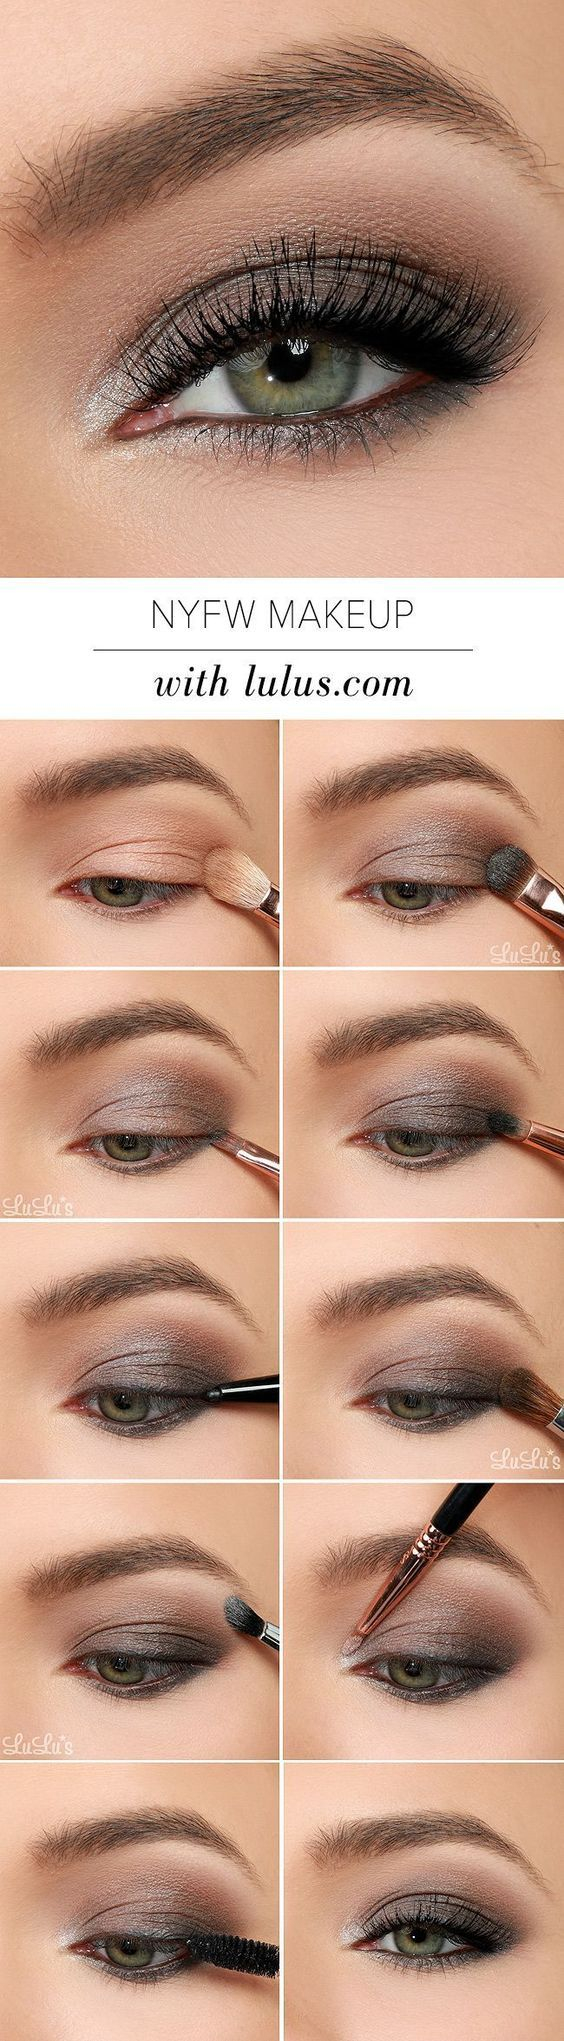 Amazing Eye Makeup Makeup Tips Tutorials 20 Amazing Eye Makeup Ideas For Every